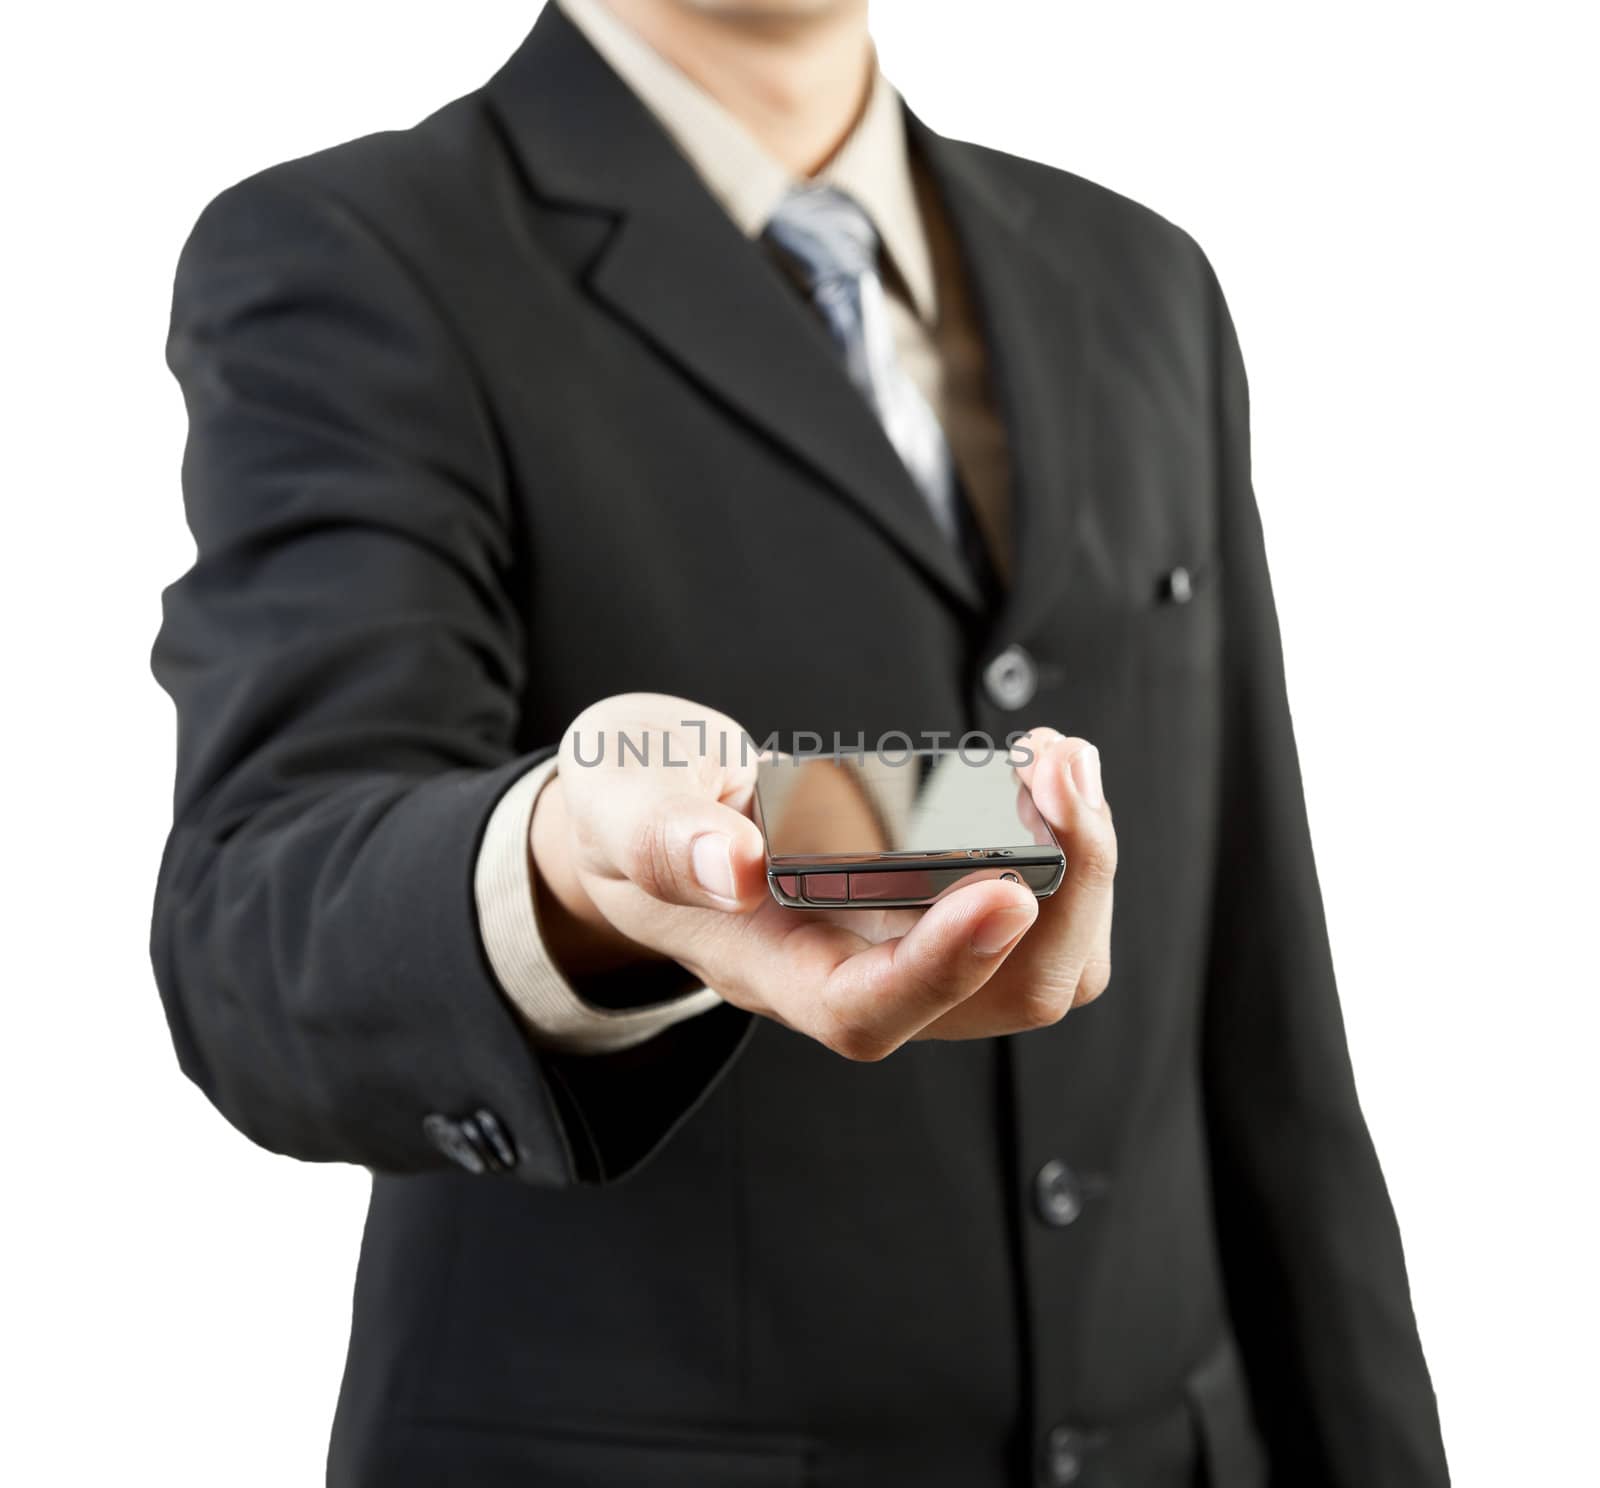 Businessman holding mobile phone